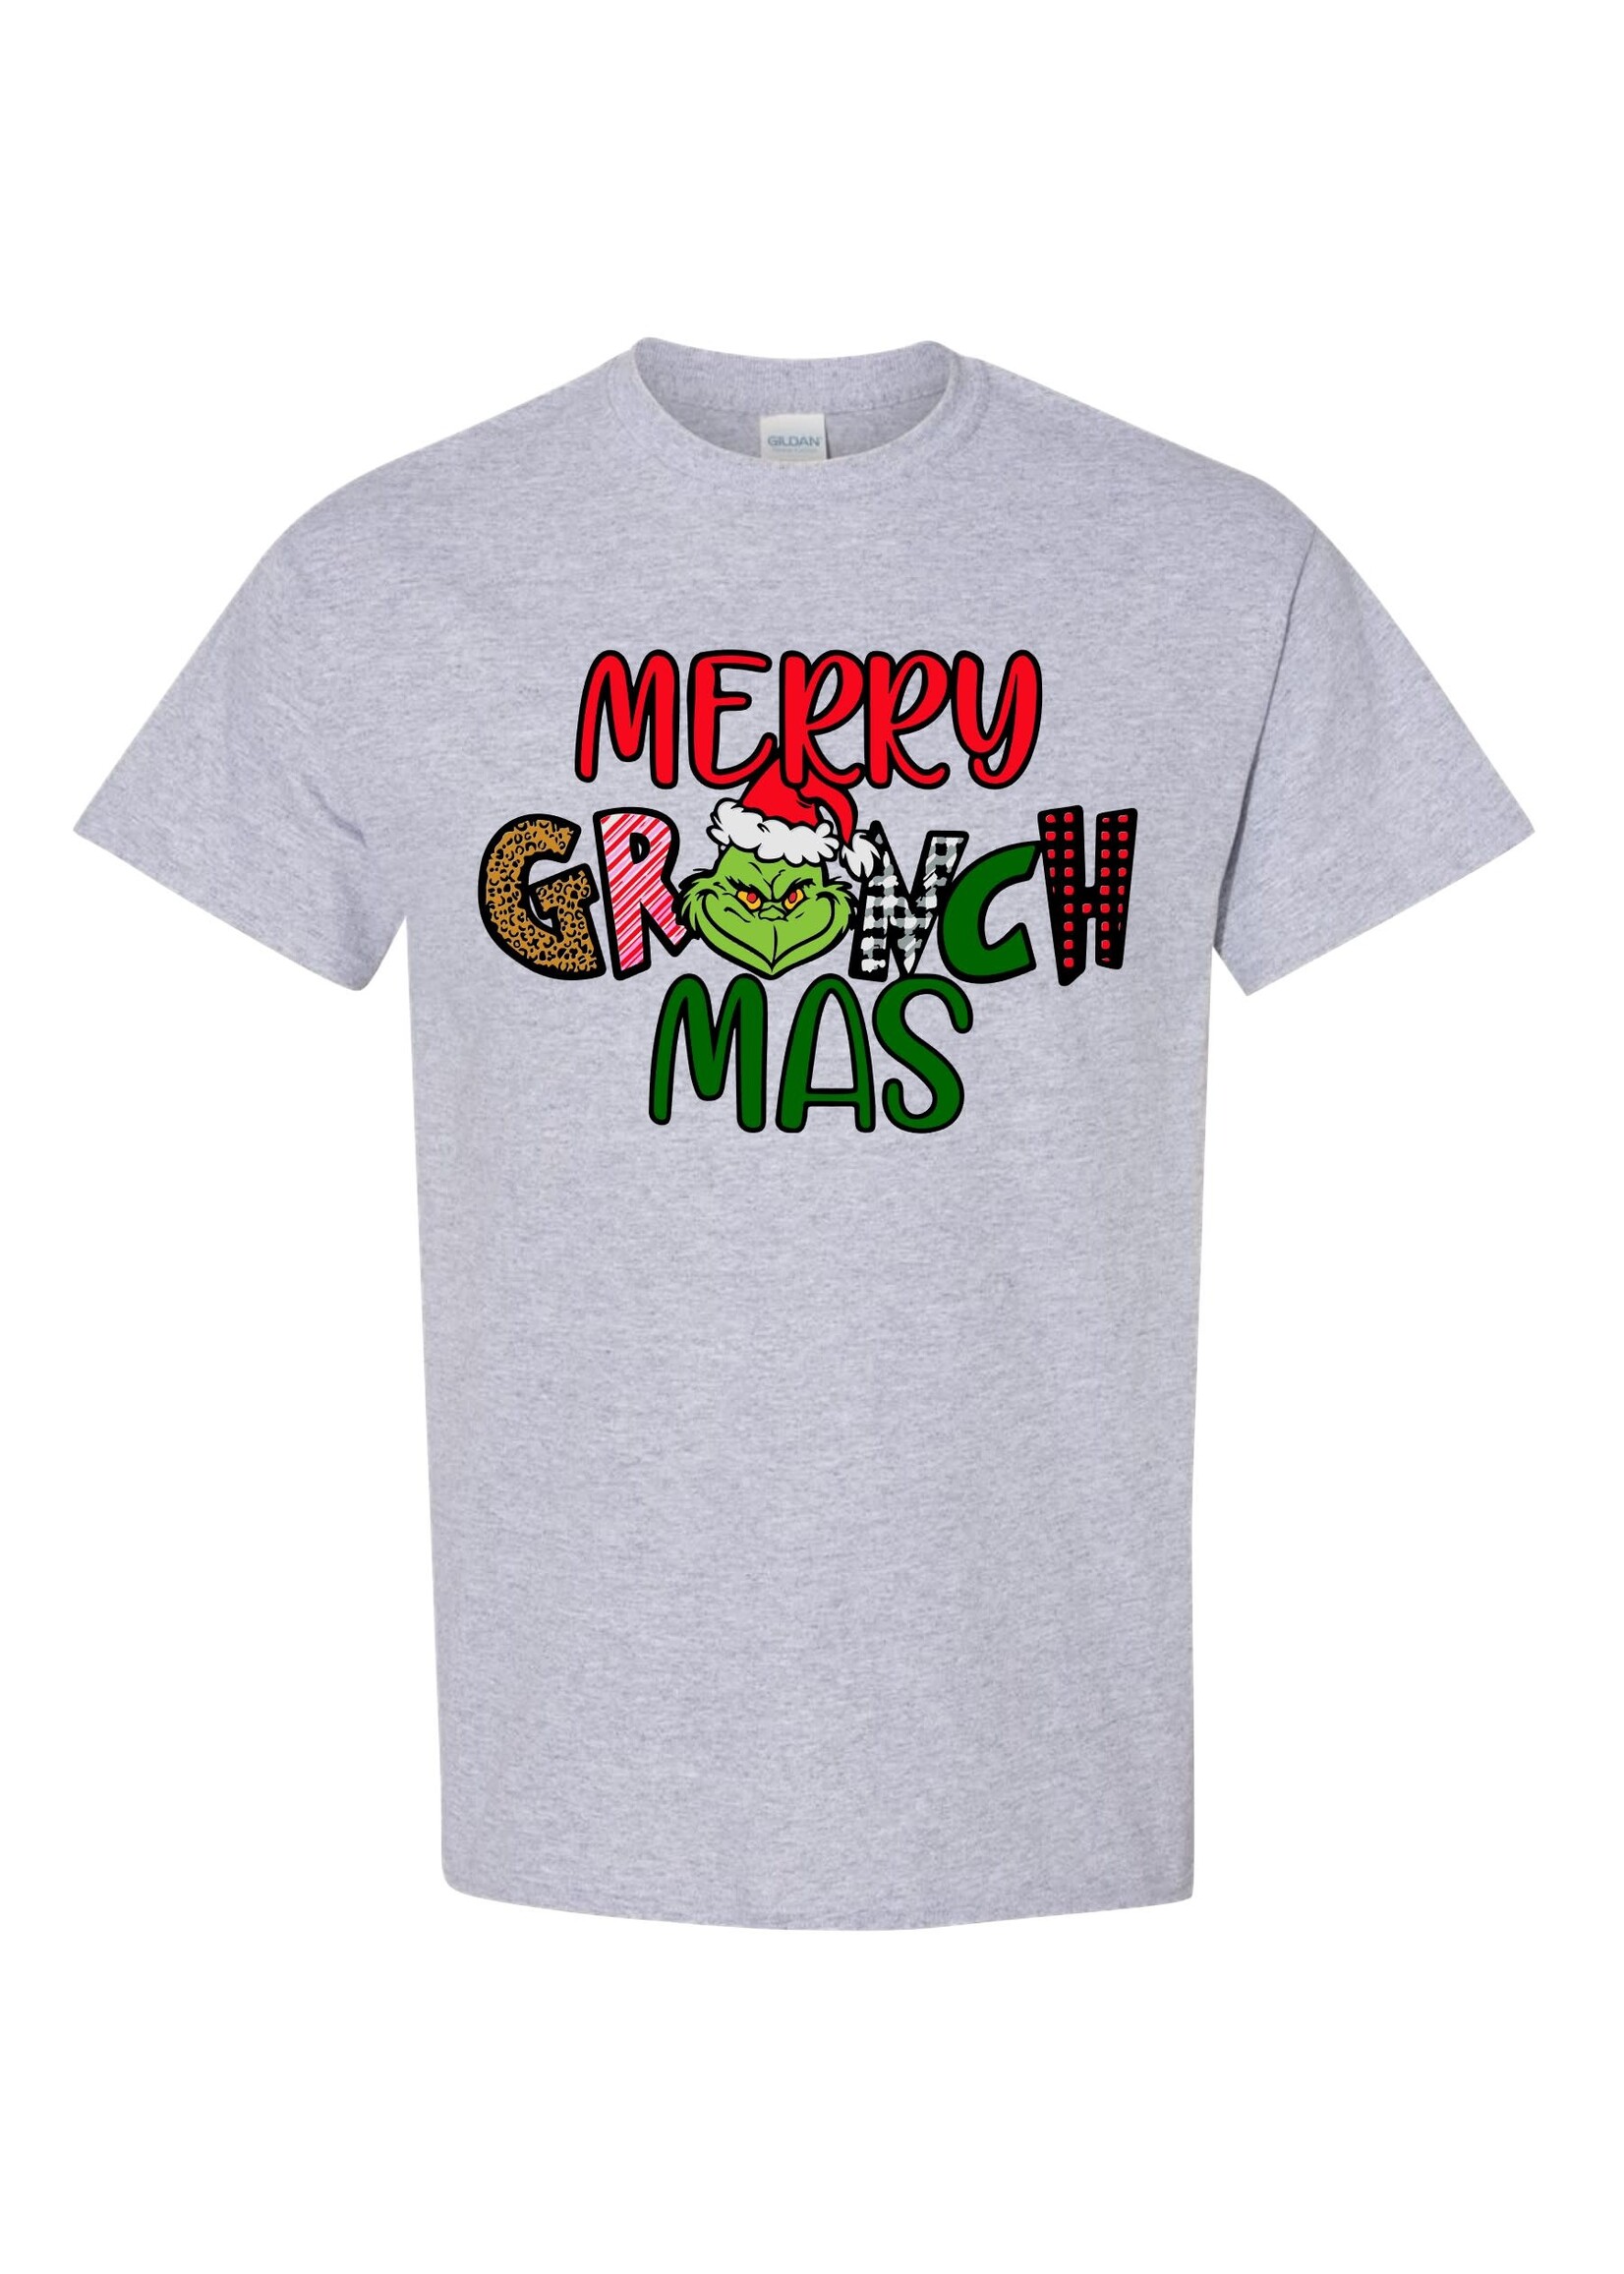 Grinchmas T-shirt